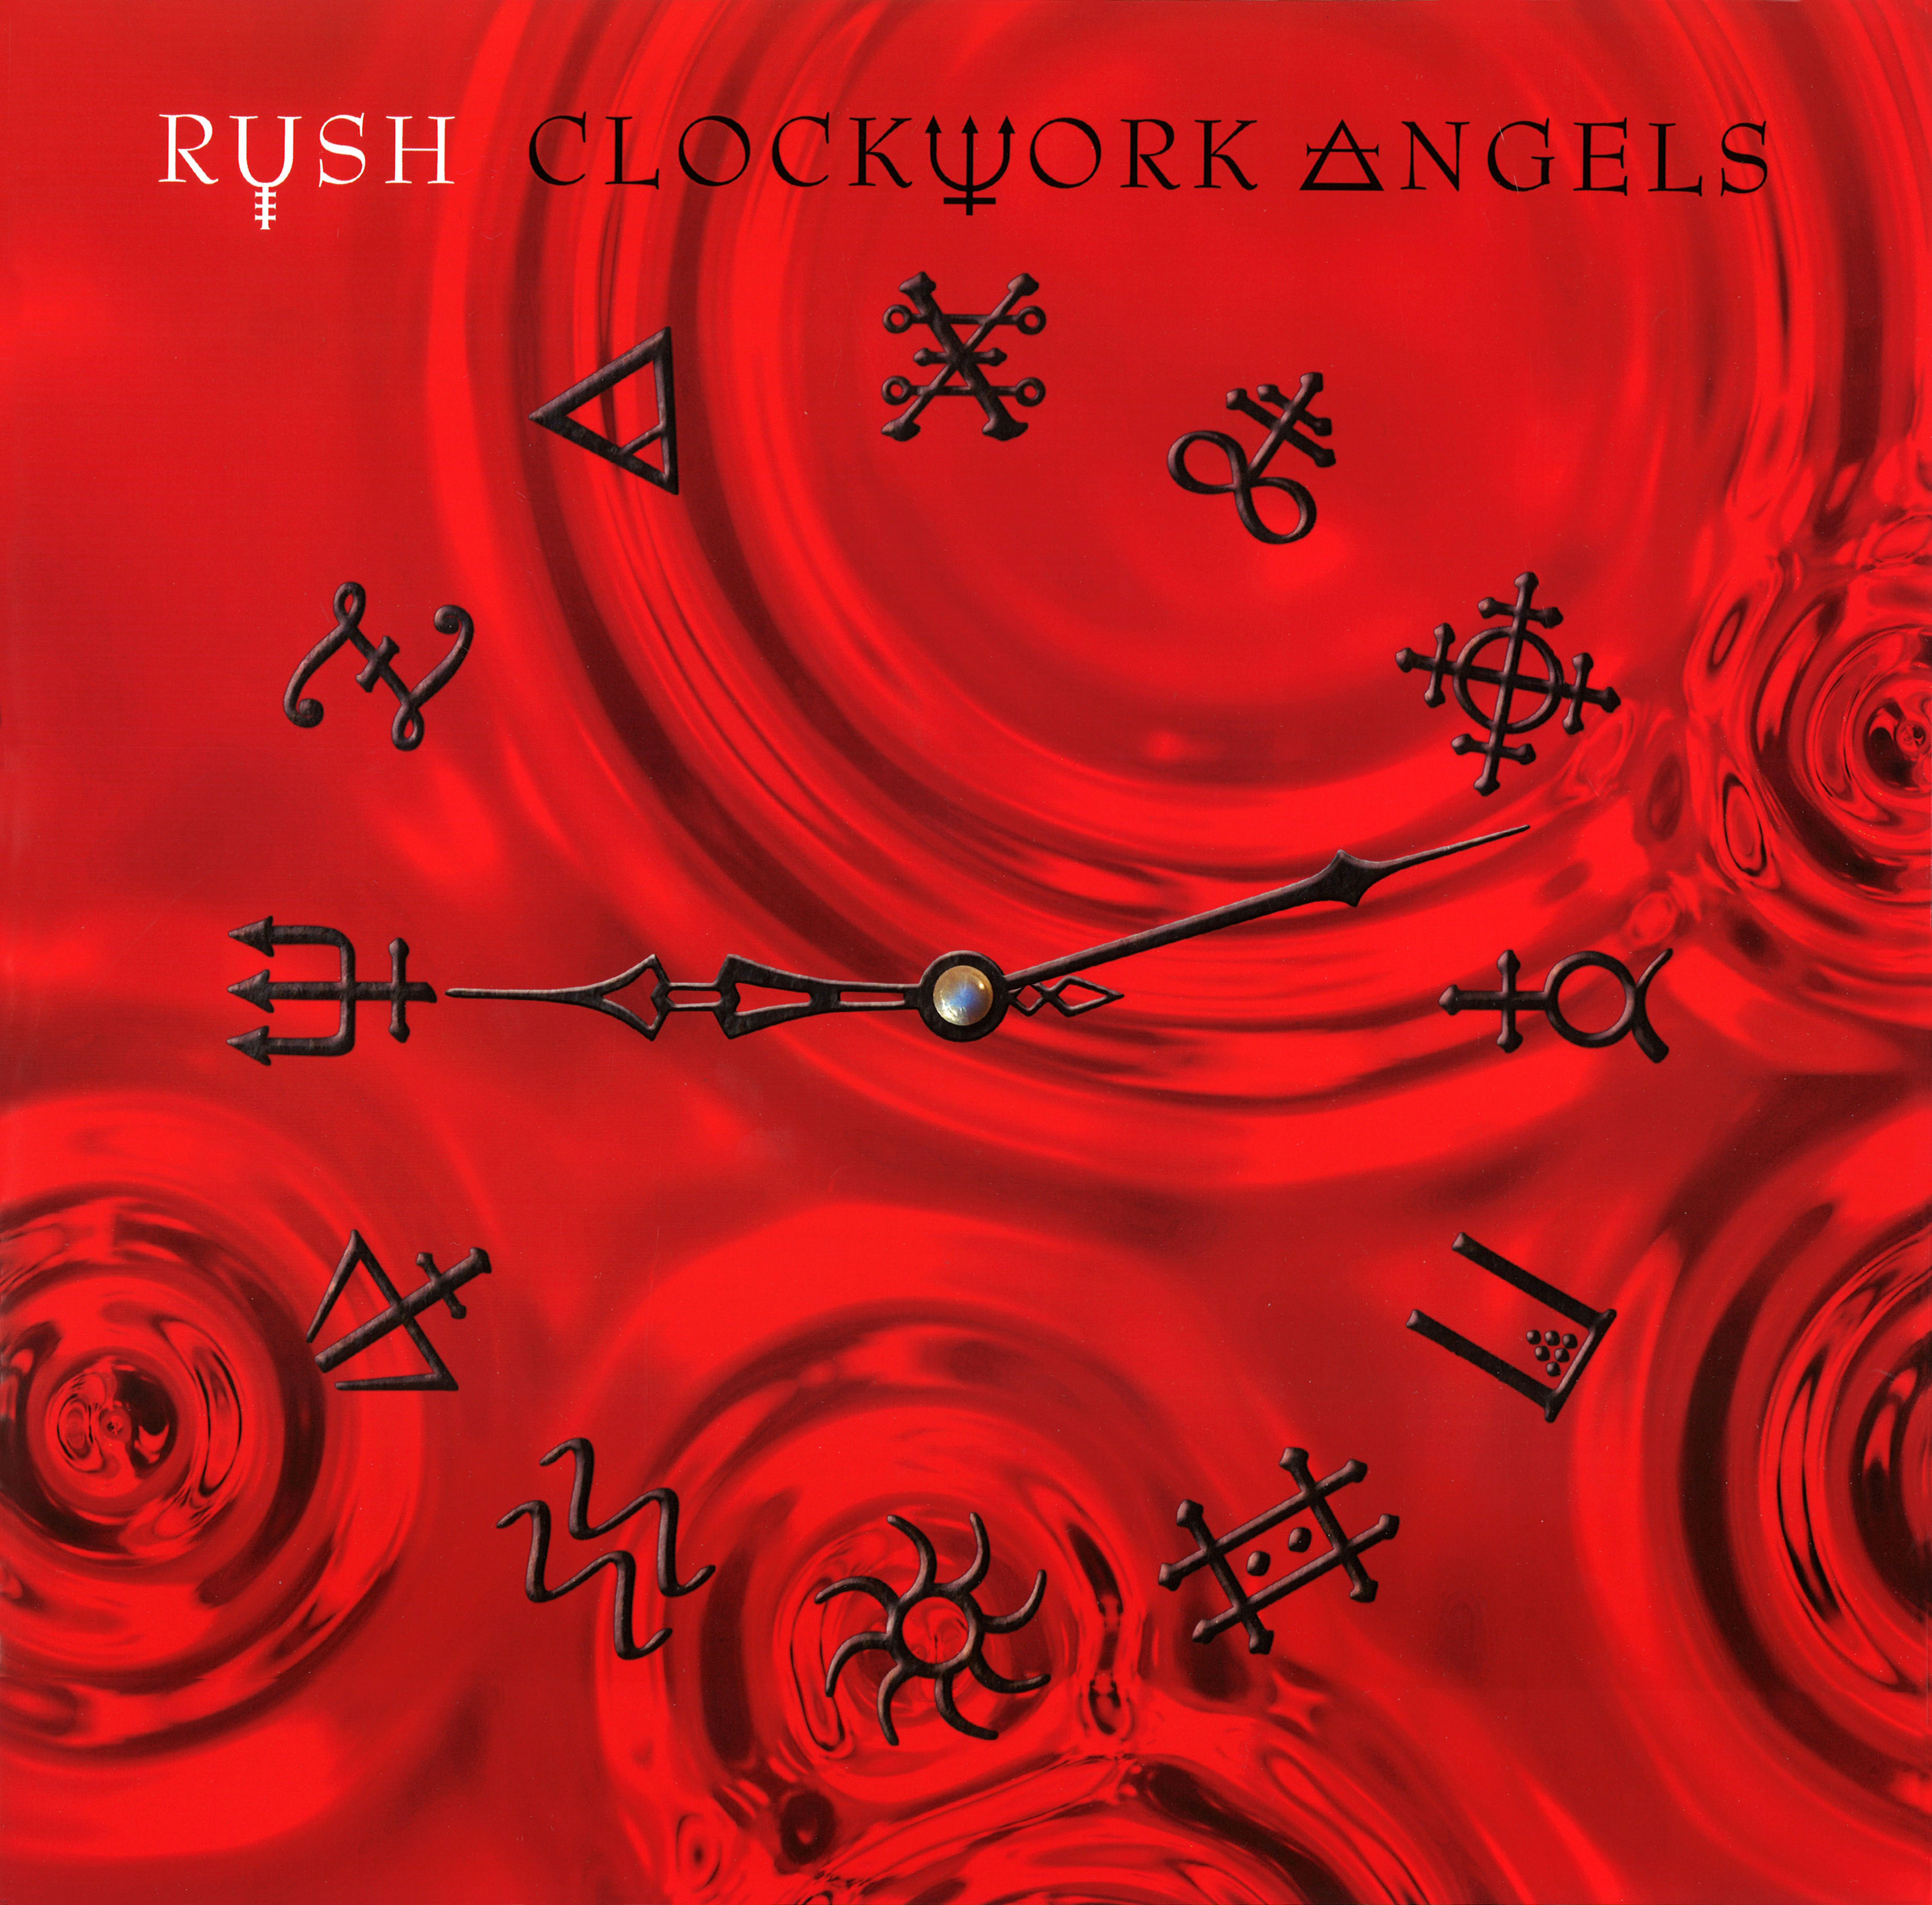 Rush Album Covers Wallpaper Vinyl Front Cover